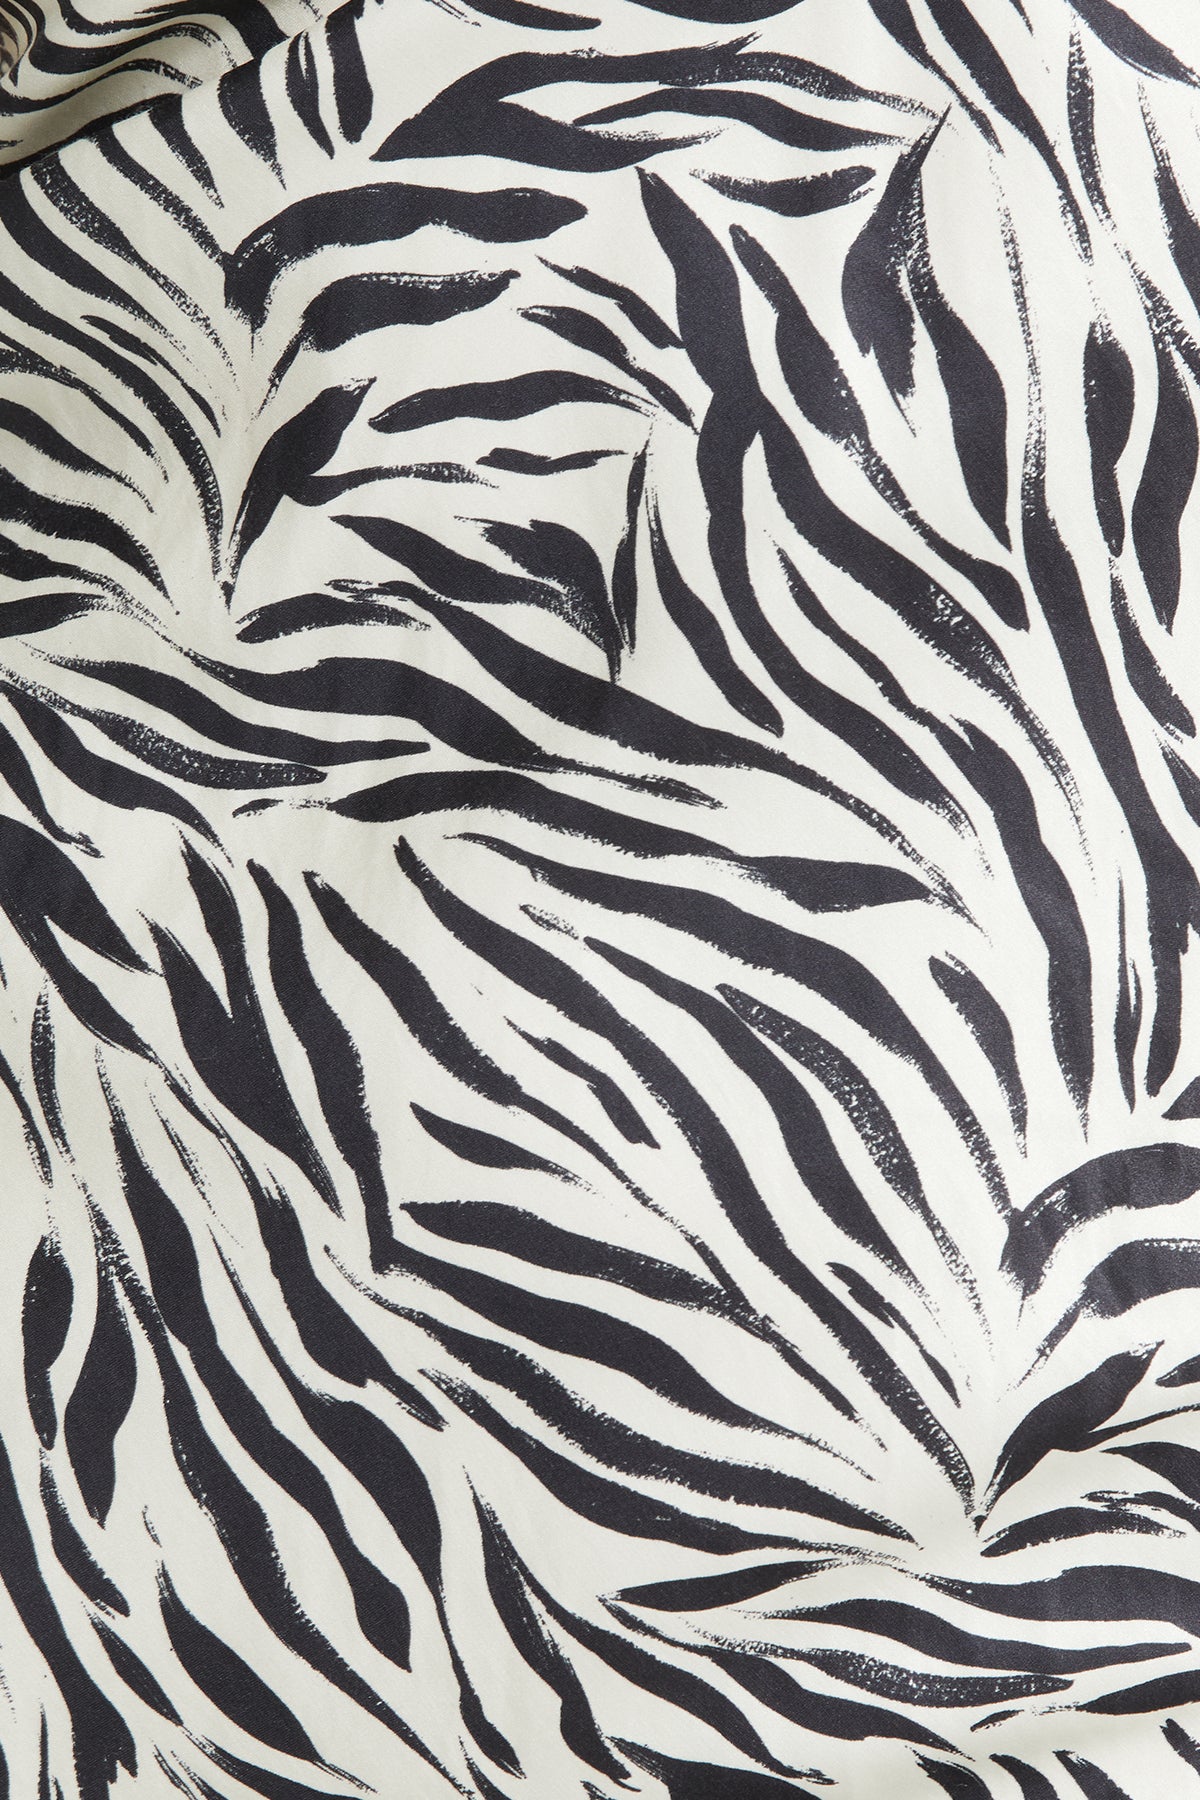 The Zafina Slip in Brush Zebra Print by Ginia Sleep